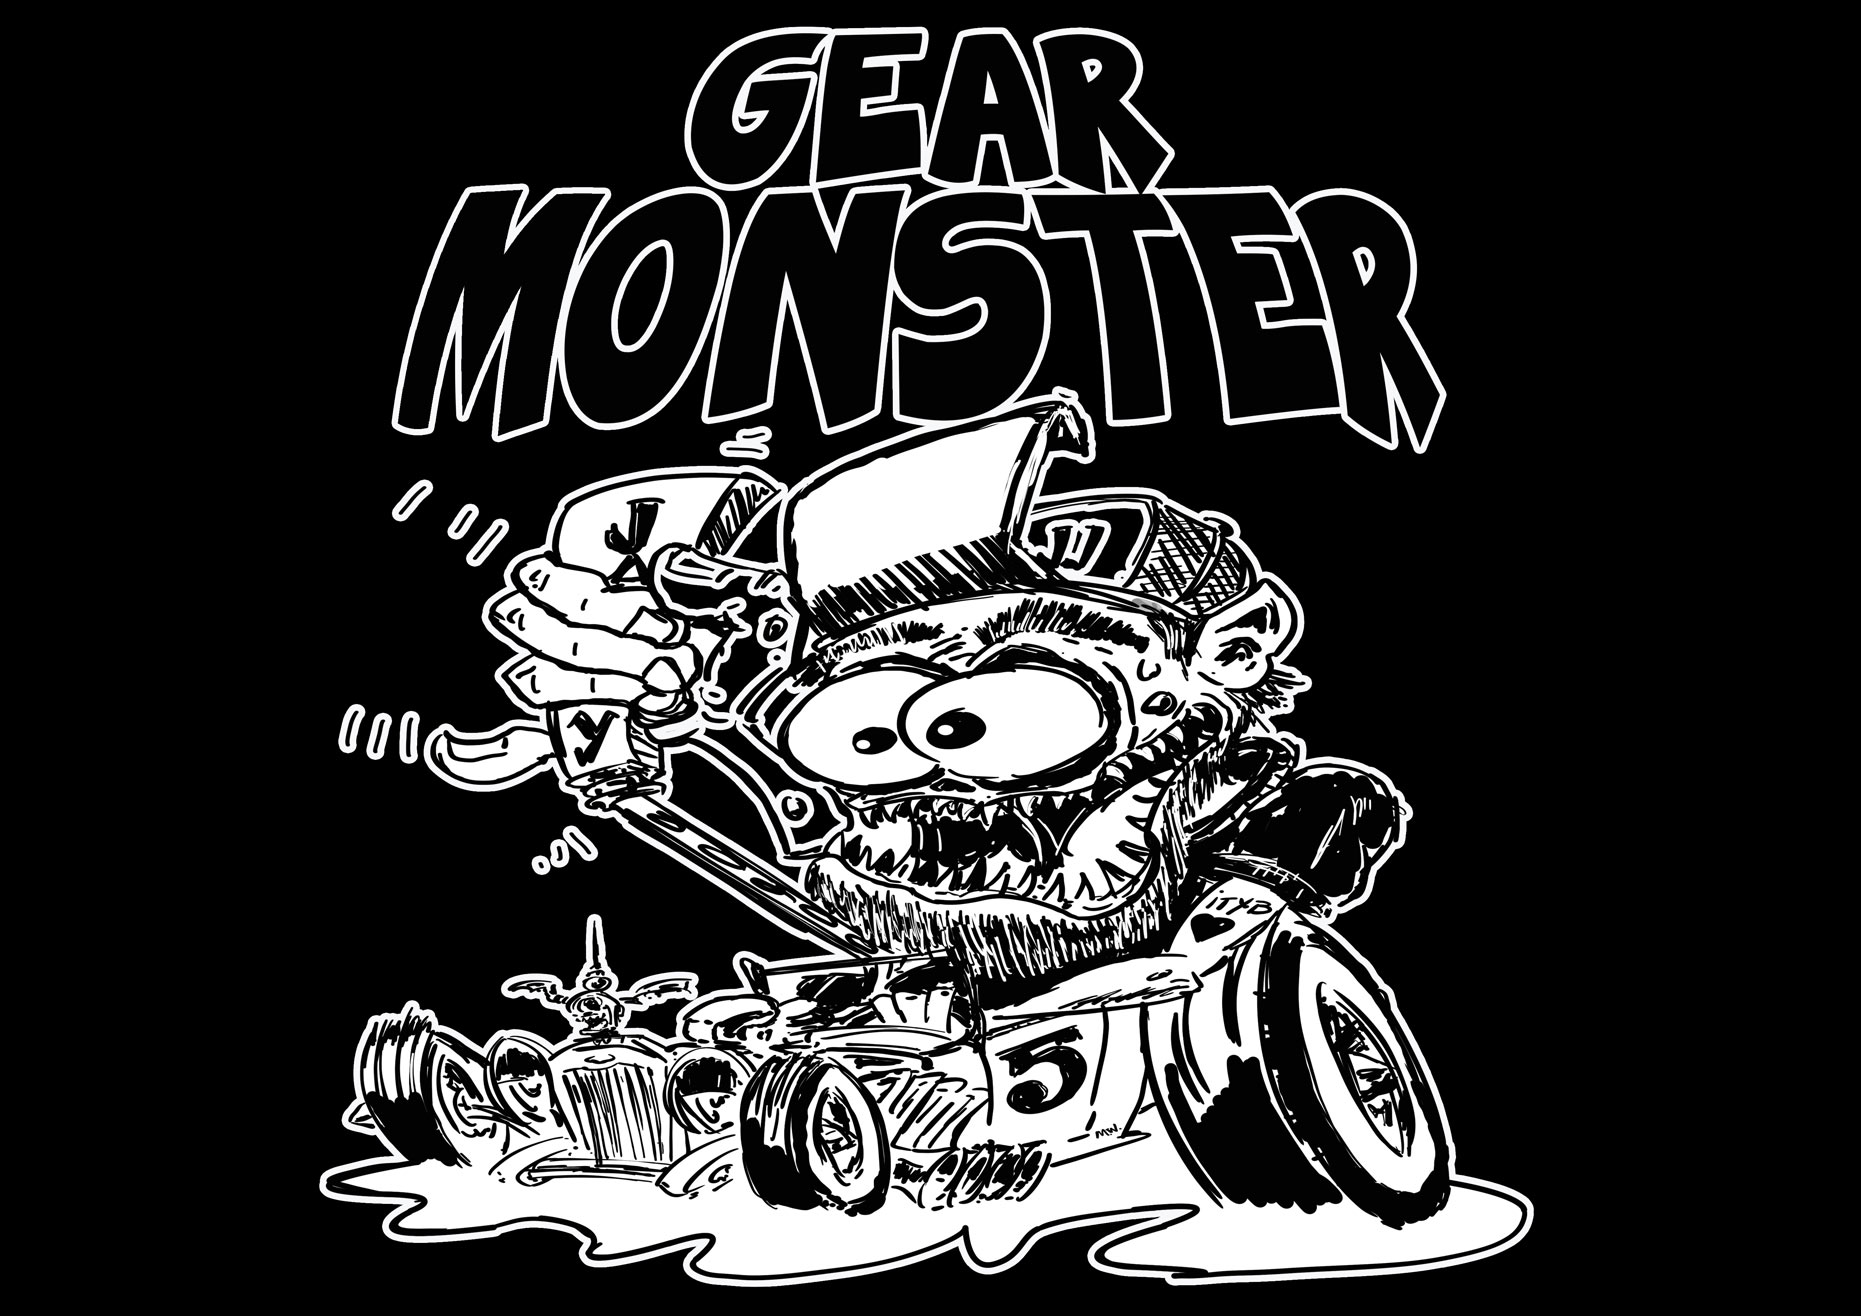 Gear Monster